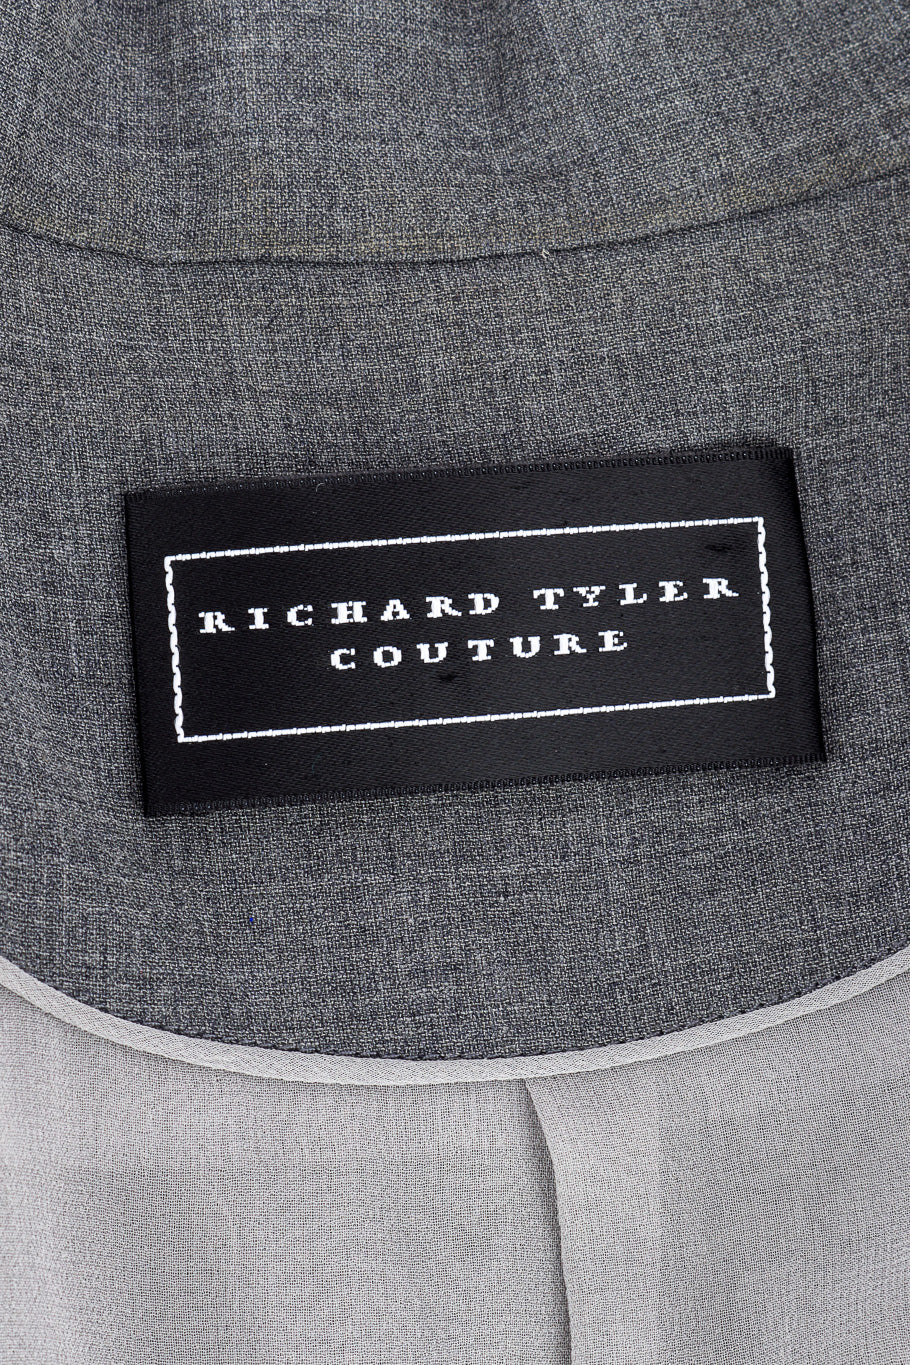 Vintage Richard Tyler Pleated Blazer and Dress Set jacket signature label closeup @recessla